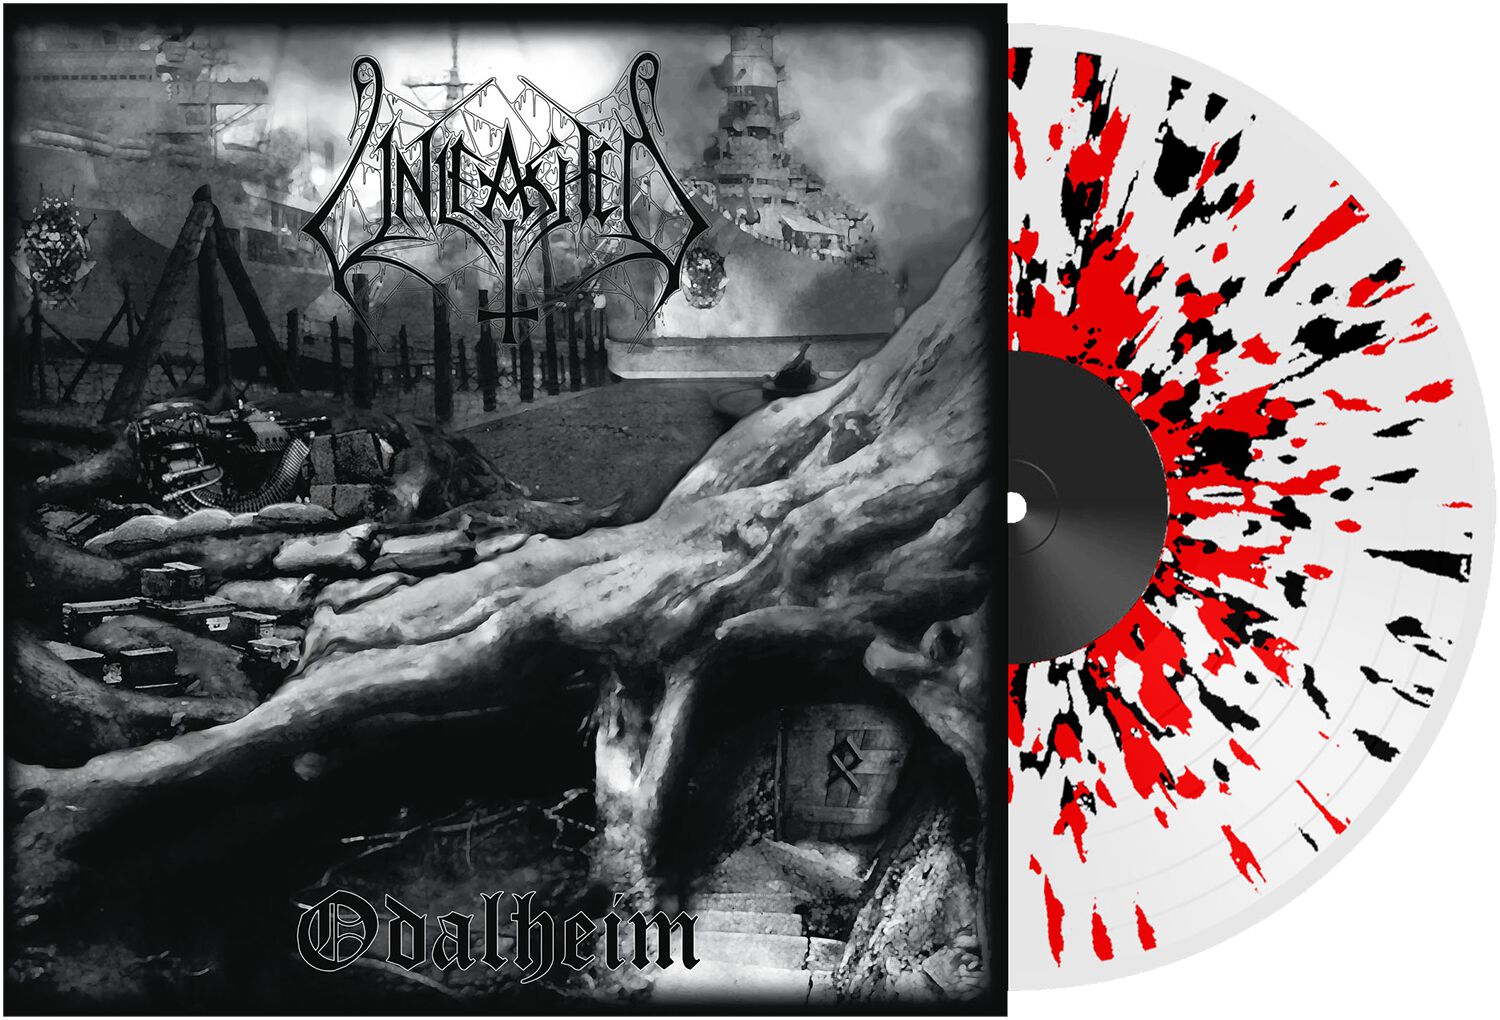 Image of Unleashed Odalheim LP splattered